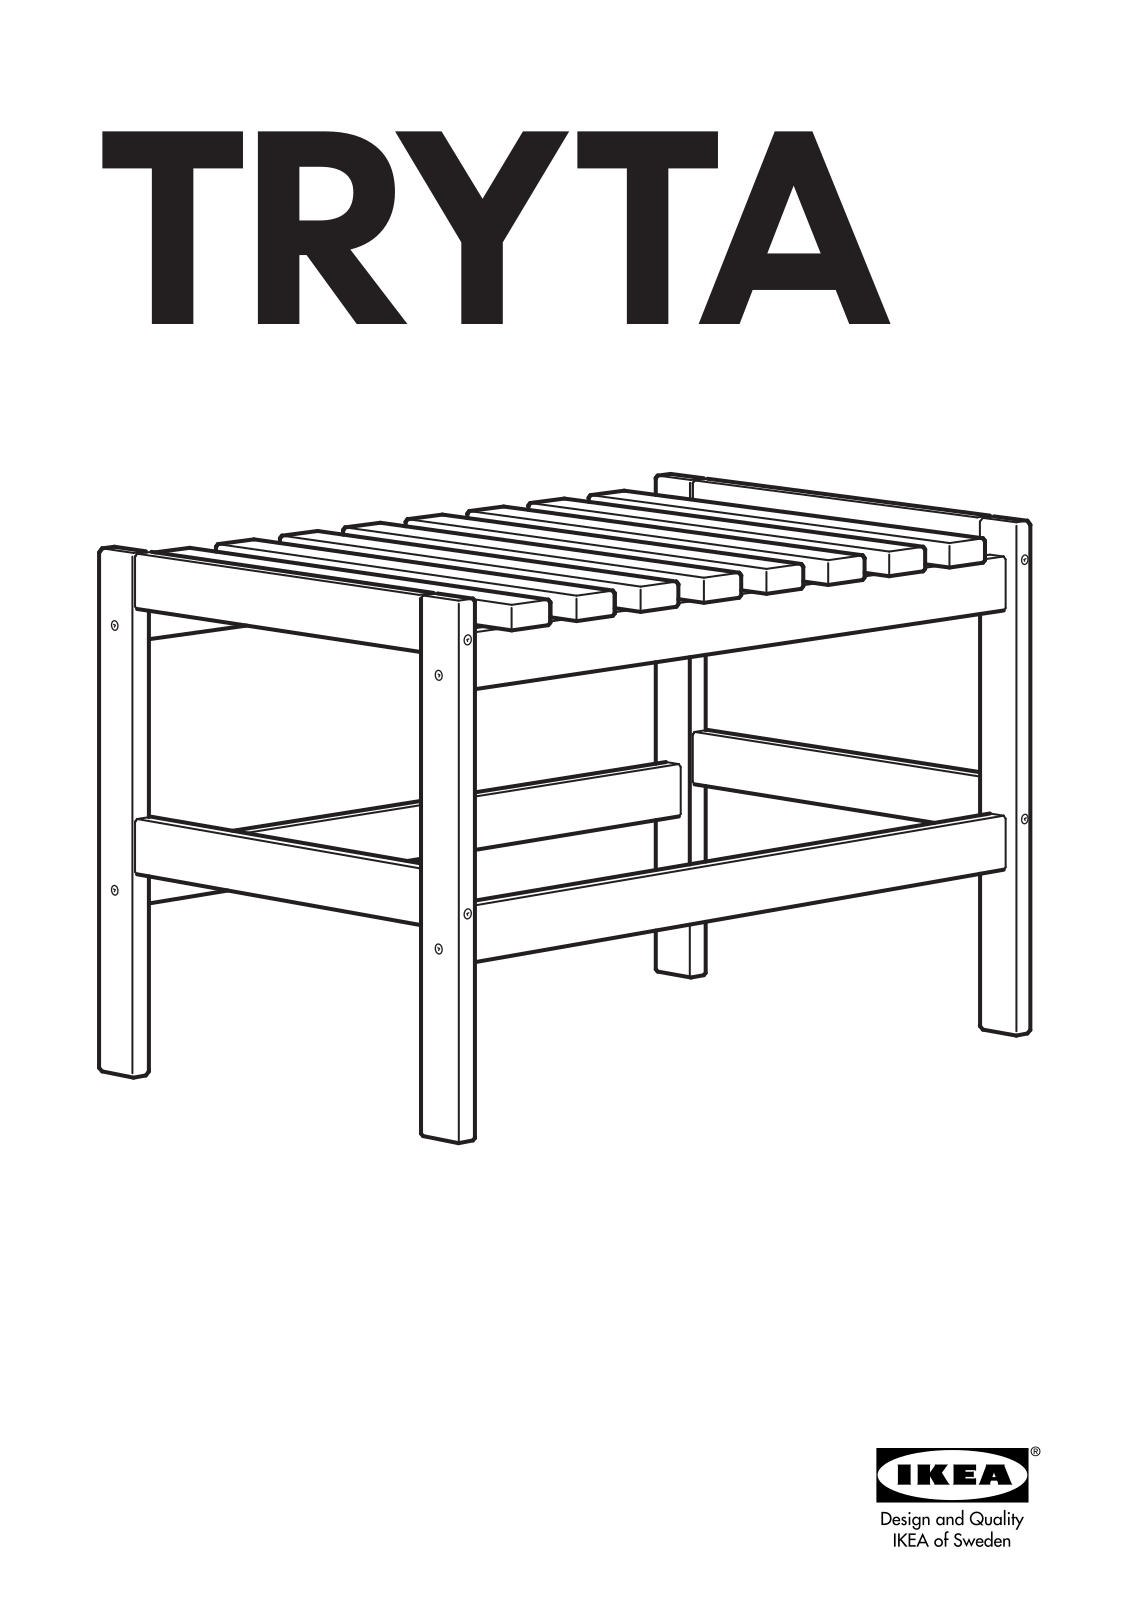 IKEA TRYTA User Manual